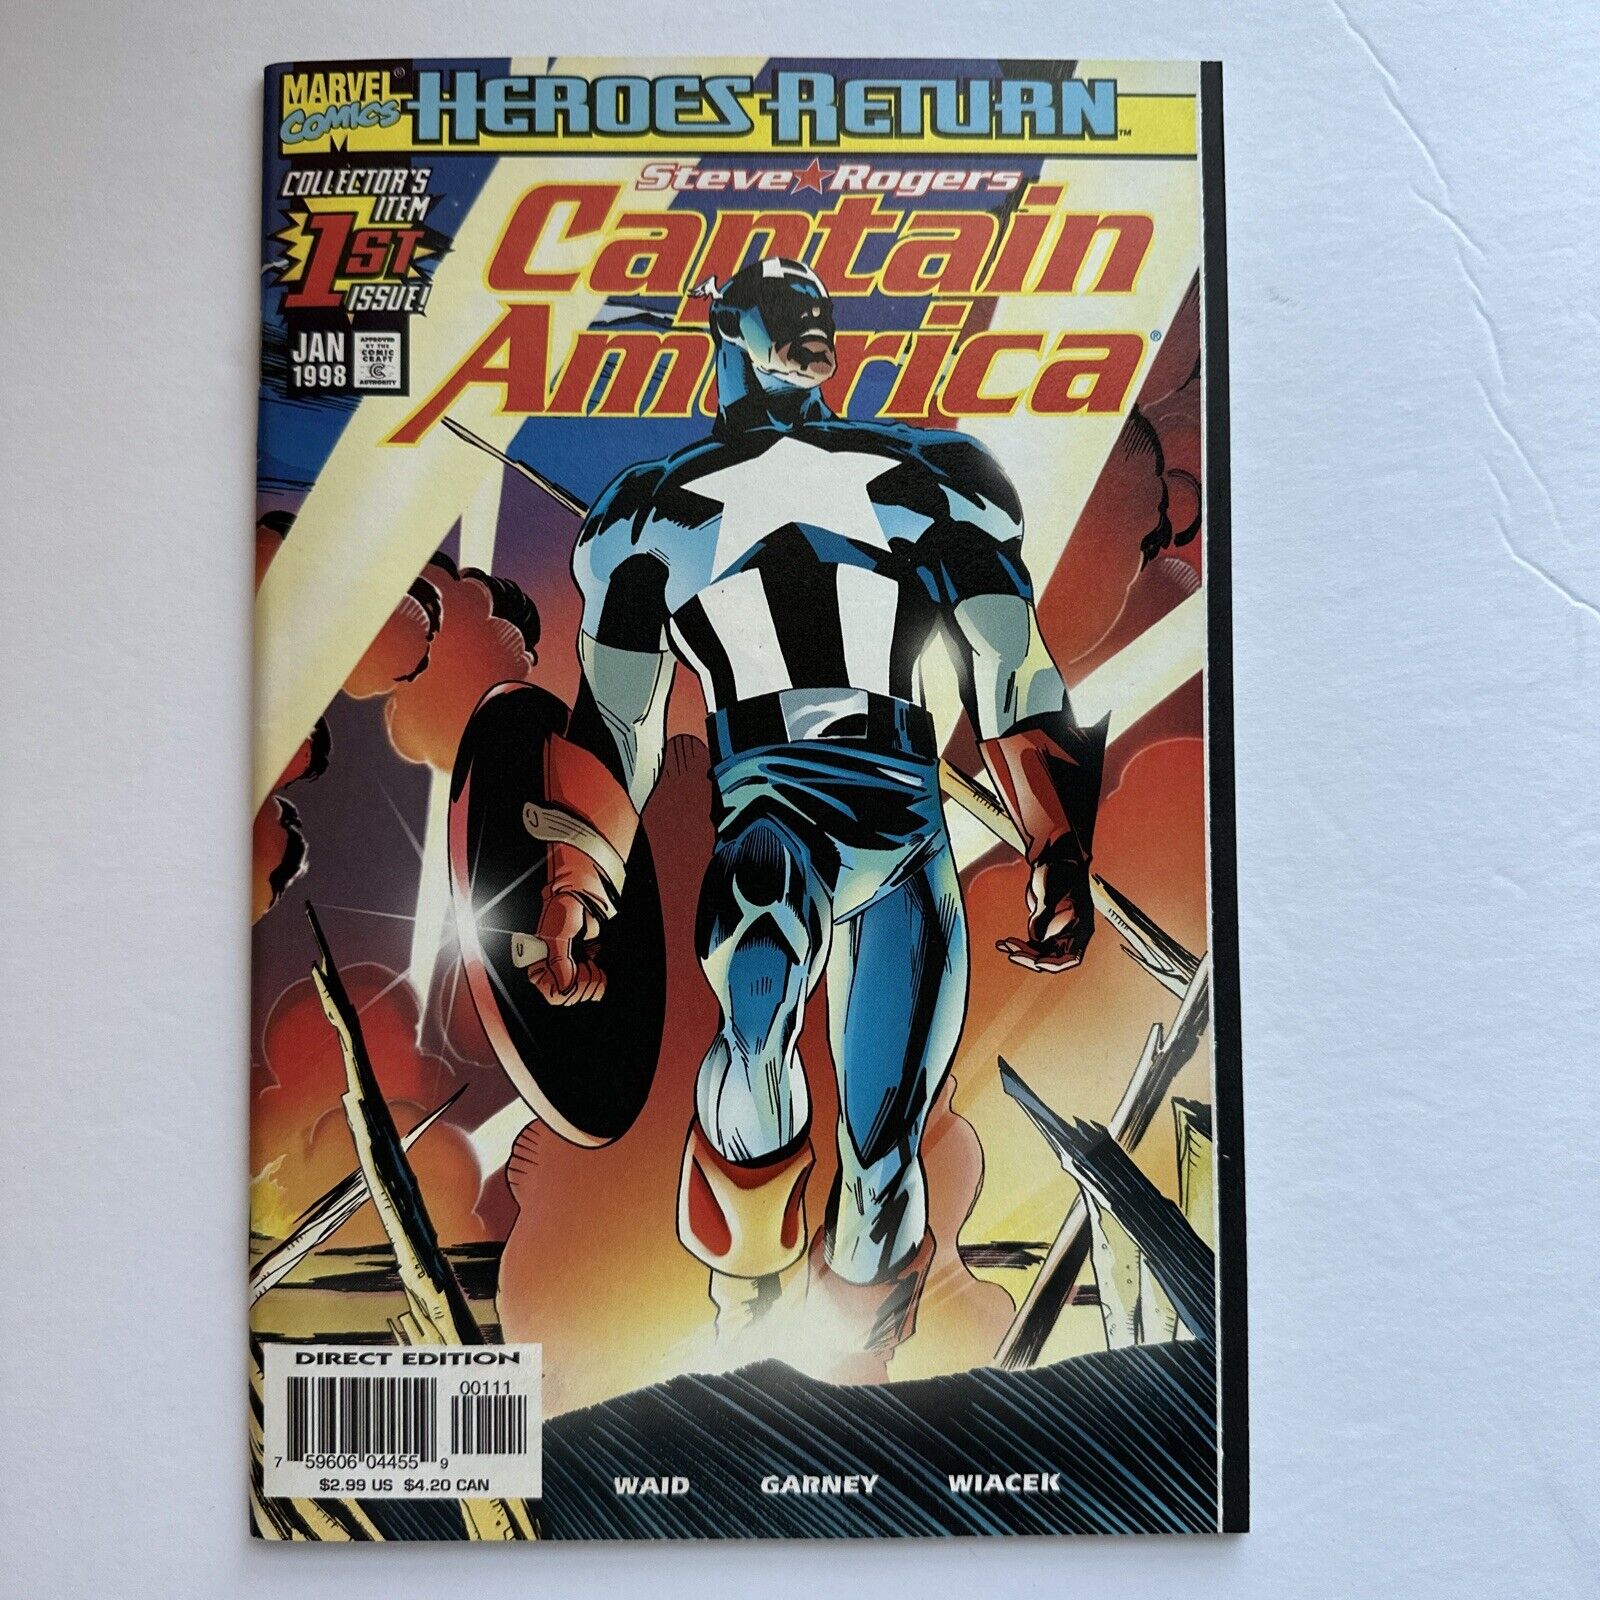 Captain America #1 (Marvel Comics January 1998)